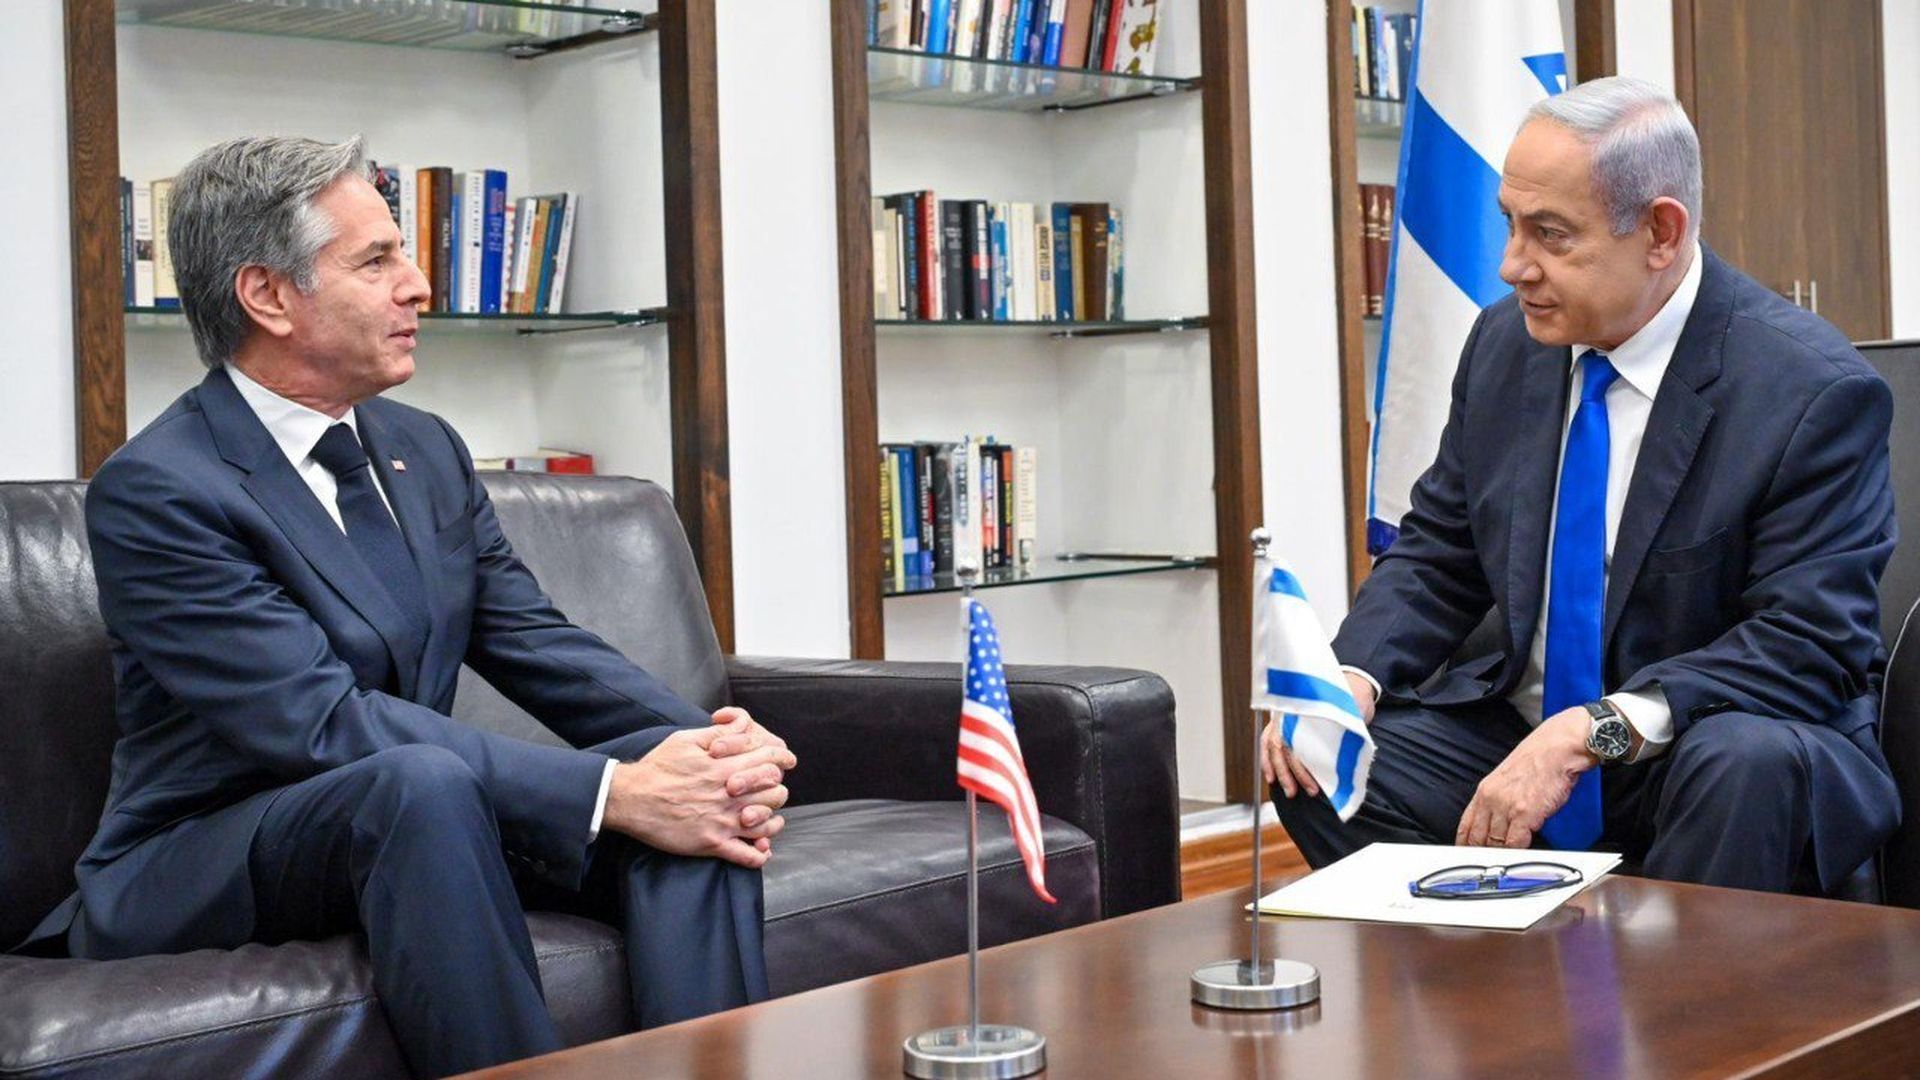 Israeli Prime Minister Benjamin Netanyahu welcomes the Secretary of State Antony Blinken during his official visit to Tel Aviv on Jan. 9. Photo: Handout/Kobi Gideon/Anadolu via Getty Images